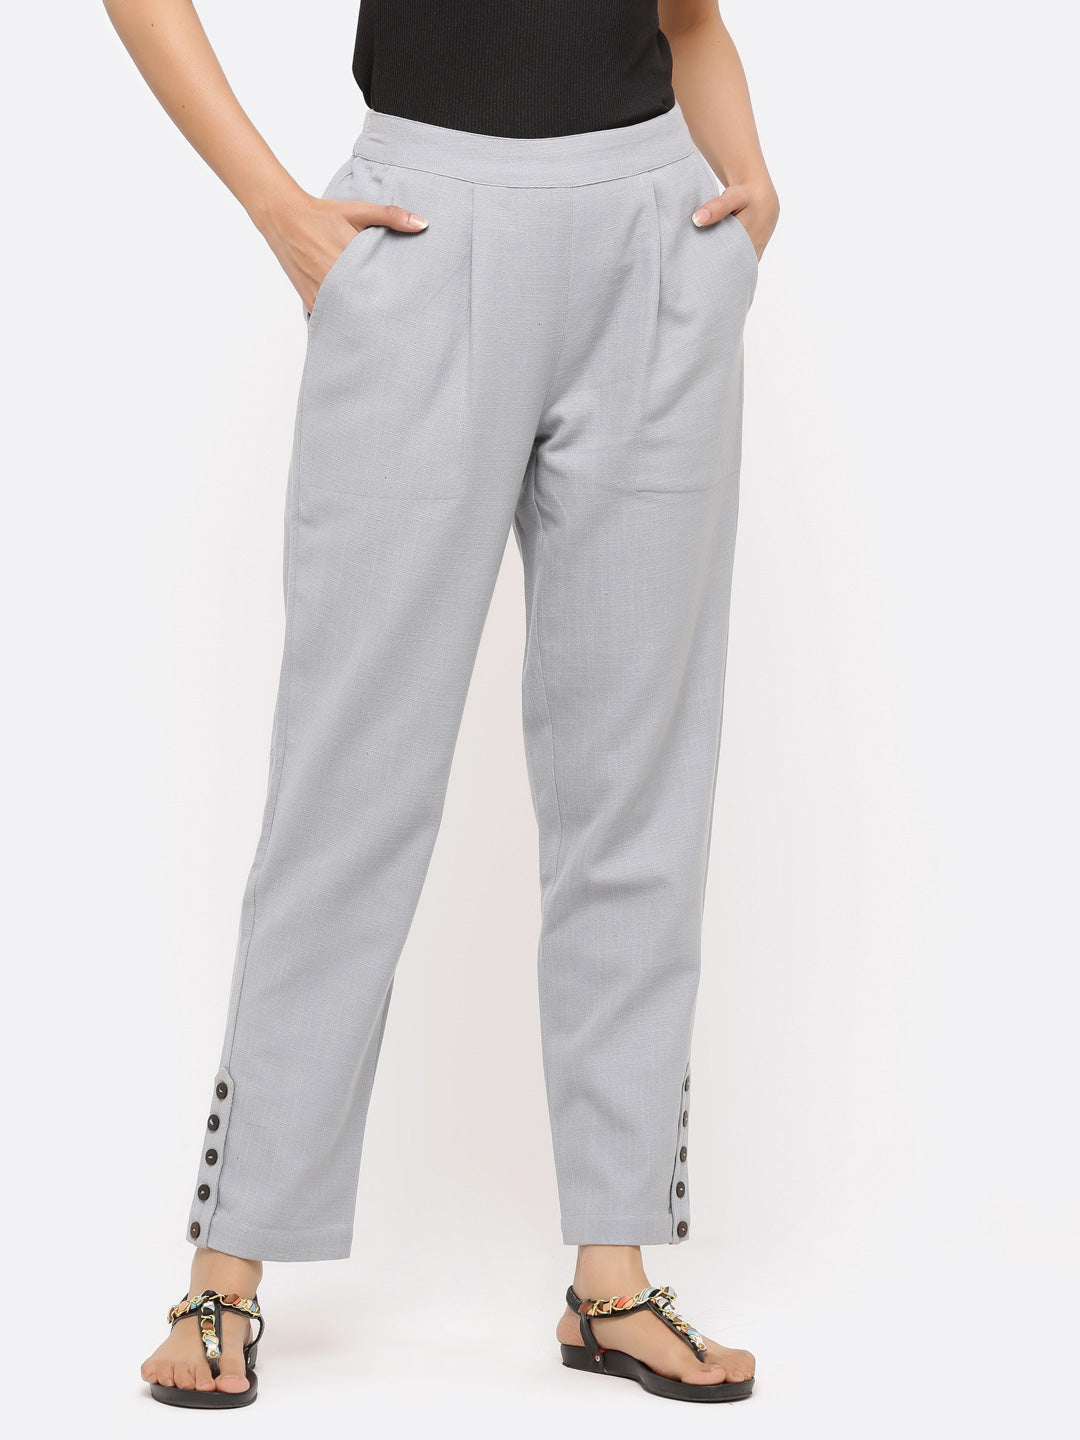 Shop Casual  Pants for women